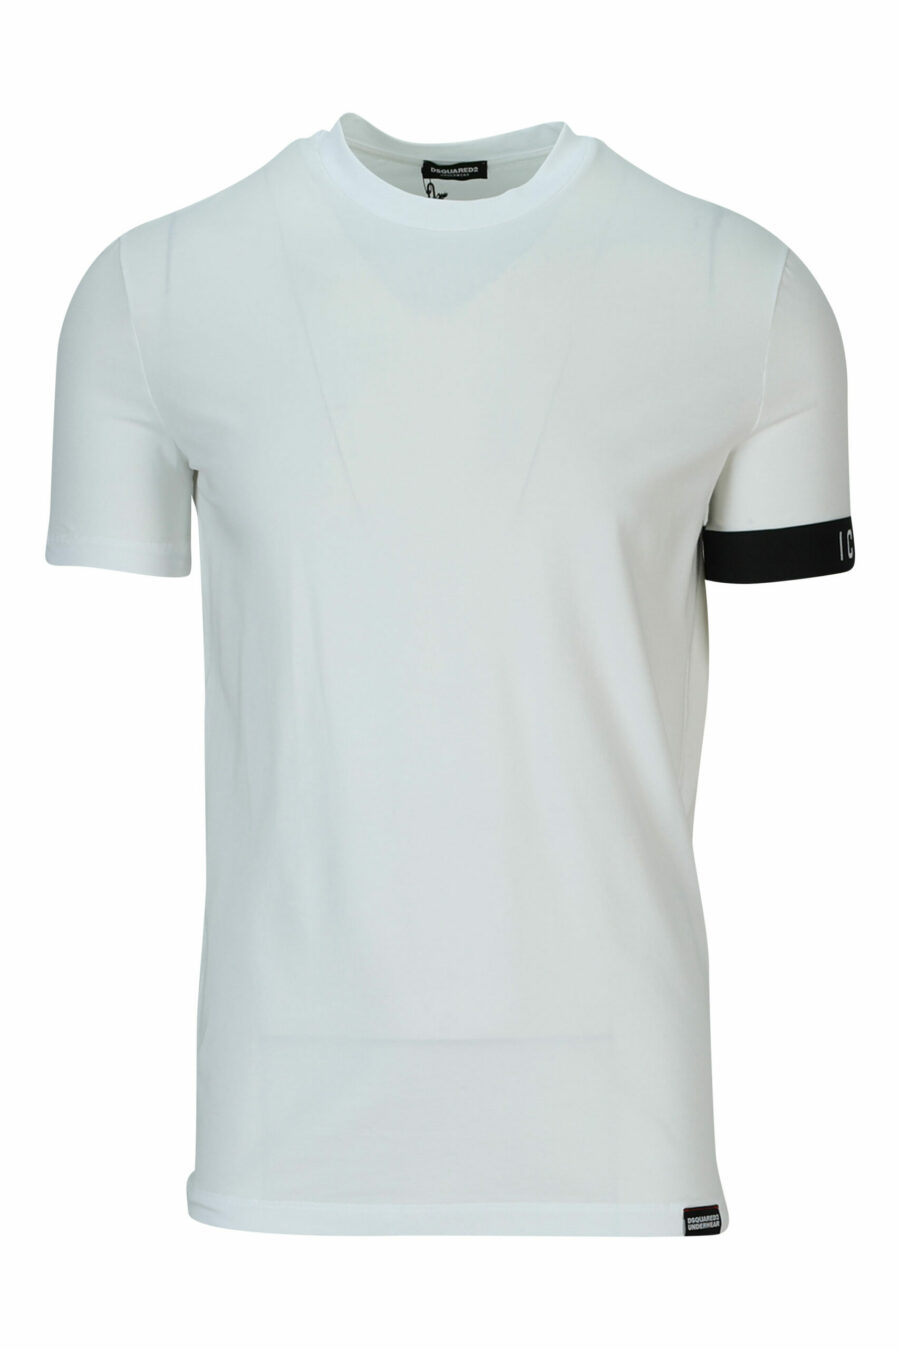 White T-shirt with black logo - 8032674767493 scaled